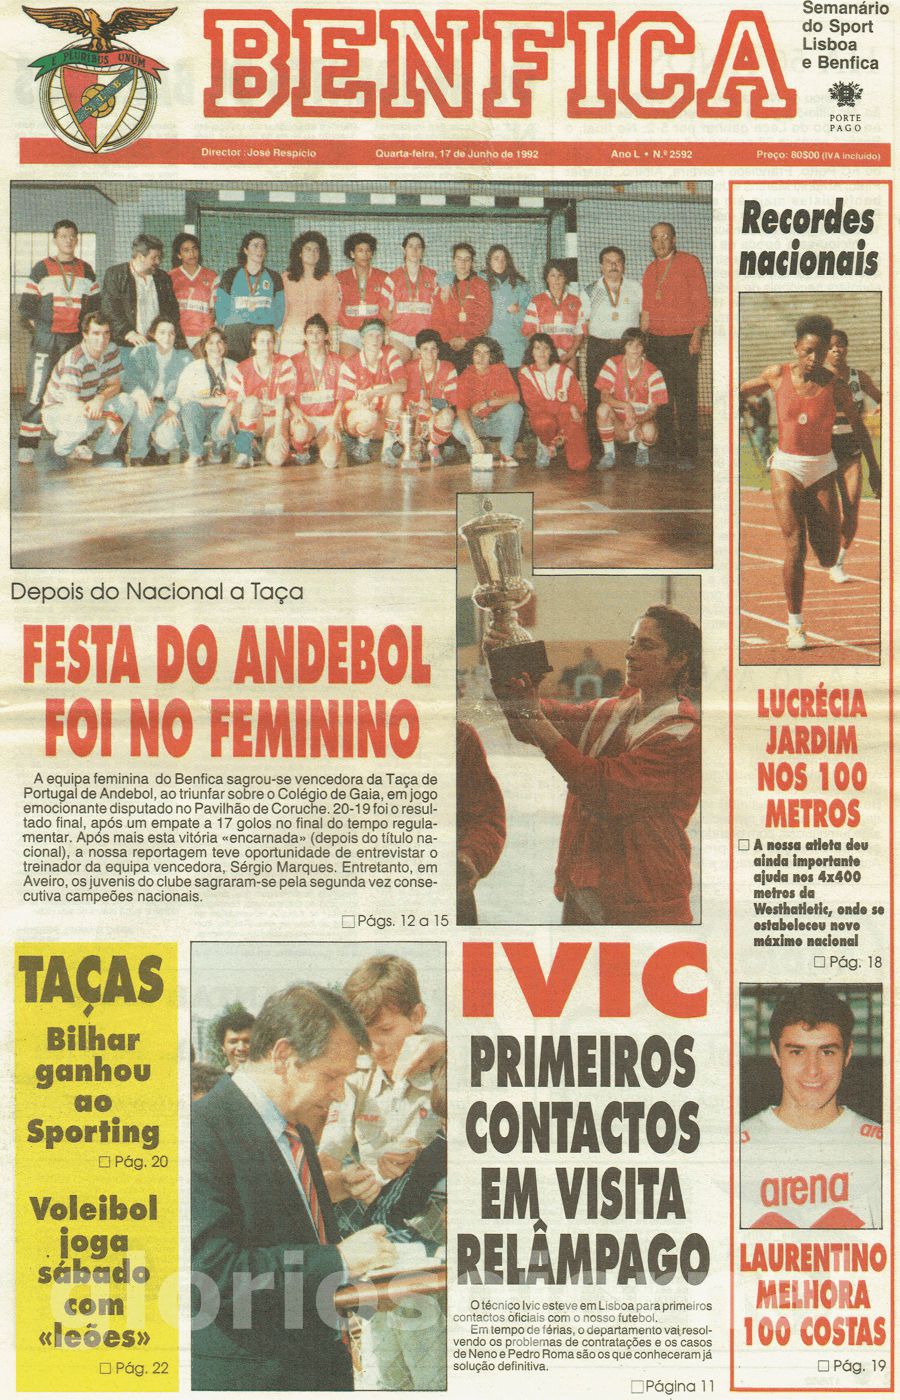 jornal o benfica 2592 1992-06-17